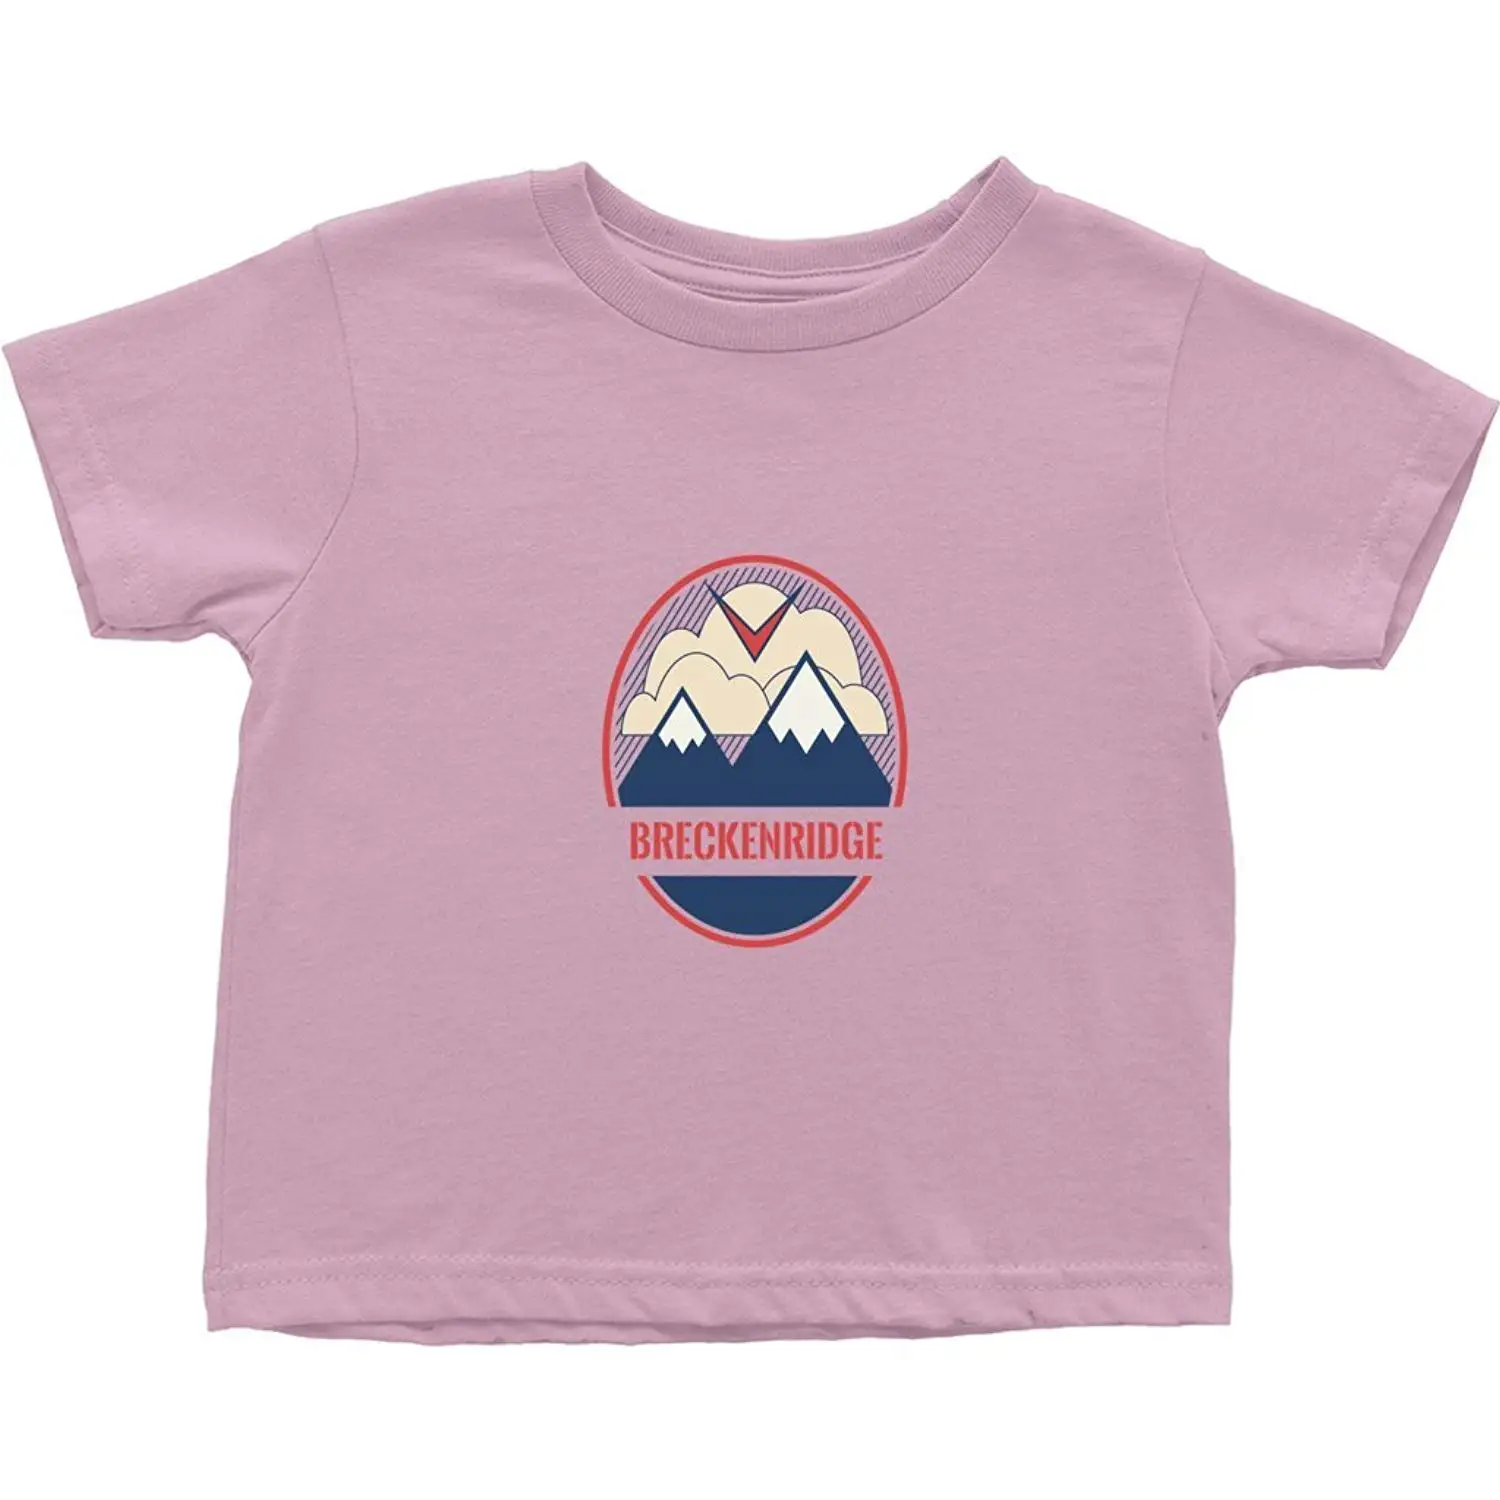 Tenn Street Goods Breckenridge Colorado Mountain Badge Unisex Infant T-Shirt